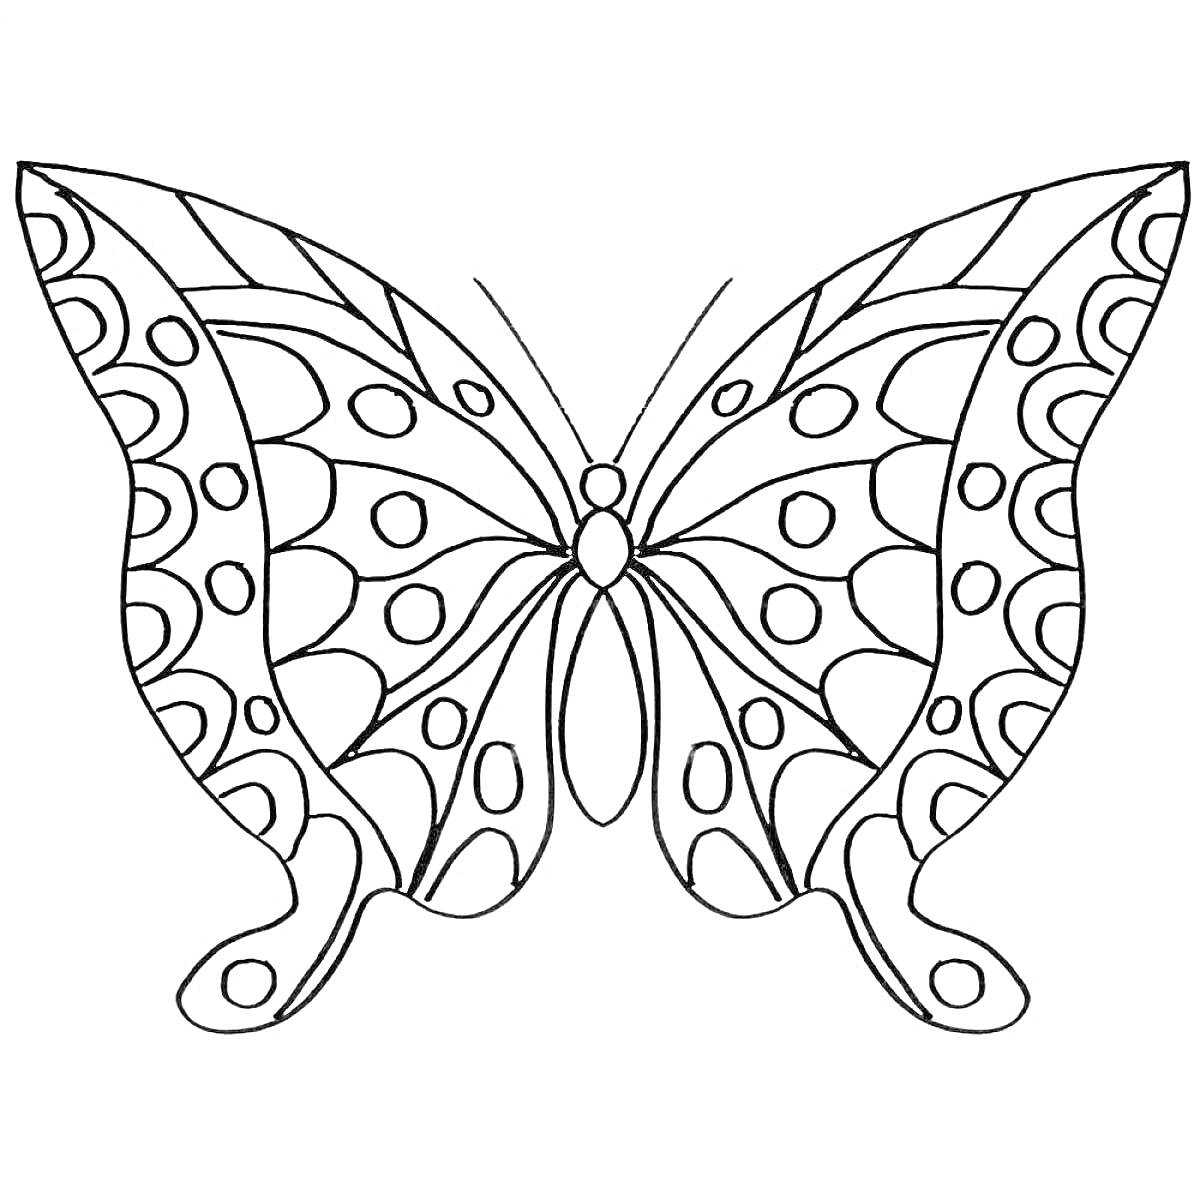 Раскраска Раскраска бабочка с узорчатыми крыльями